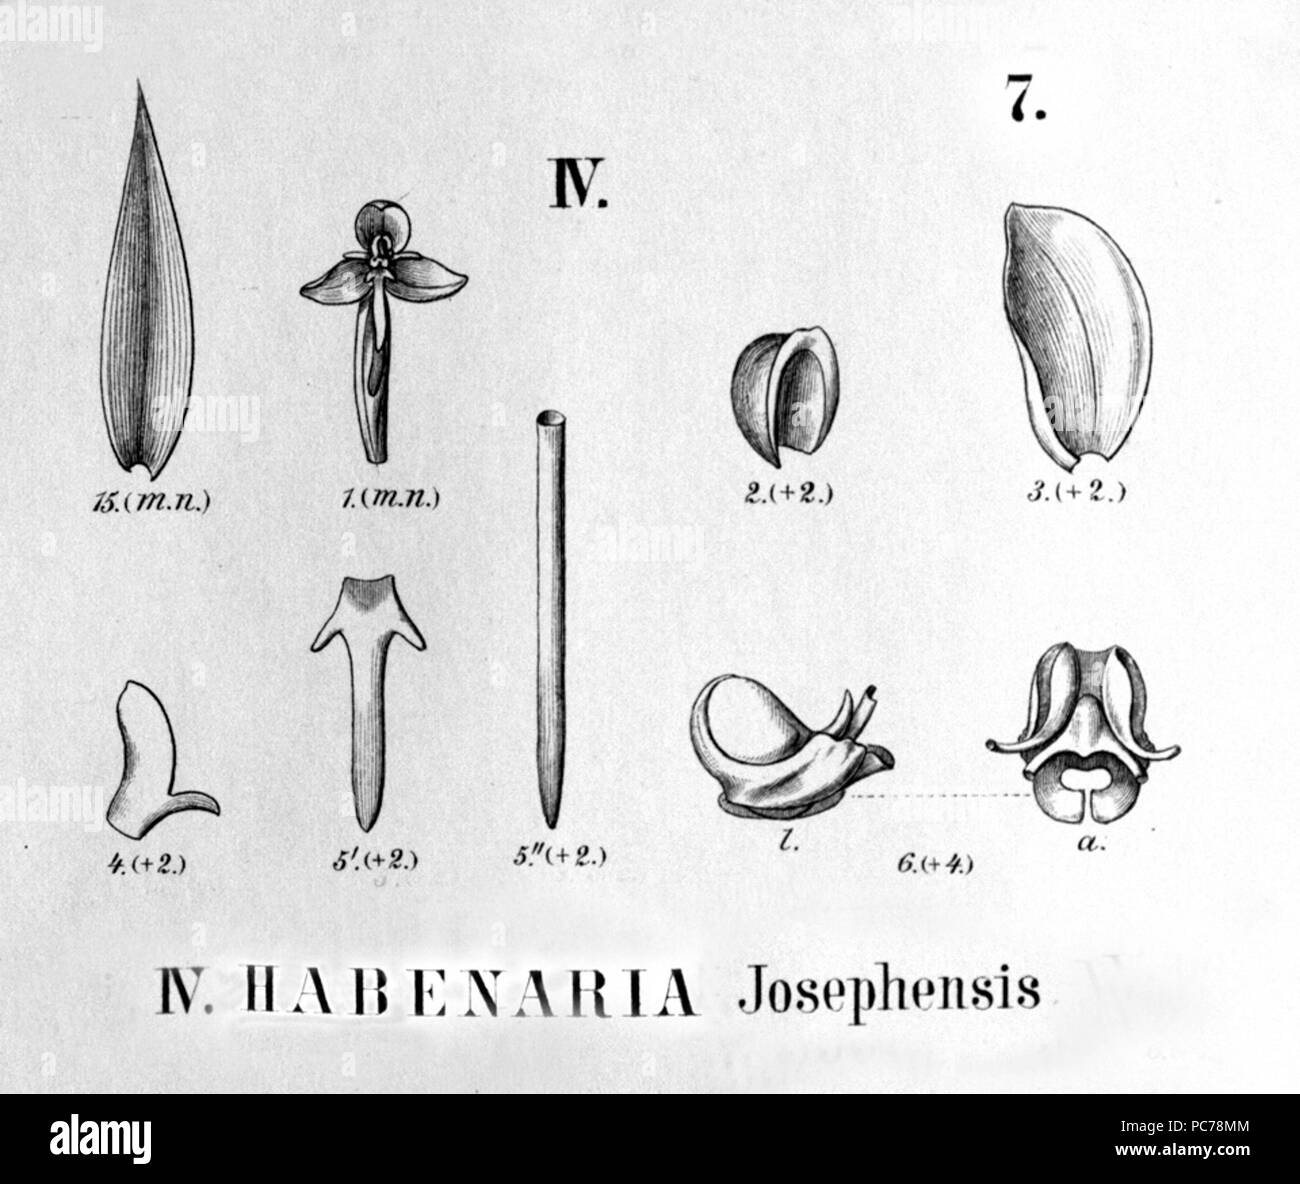 263 Habenaria josephensis - cutout from Flora Brasiliensis 3-4-07-fig IV Stock Photo